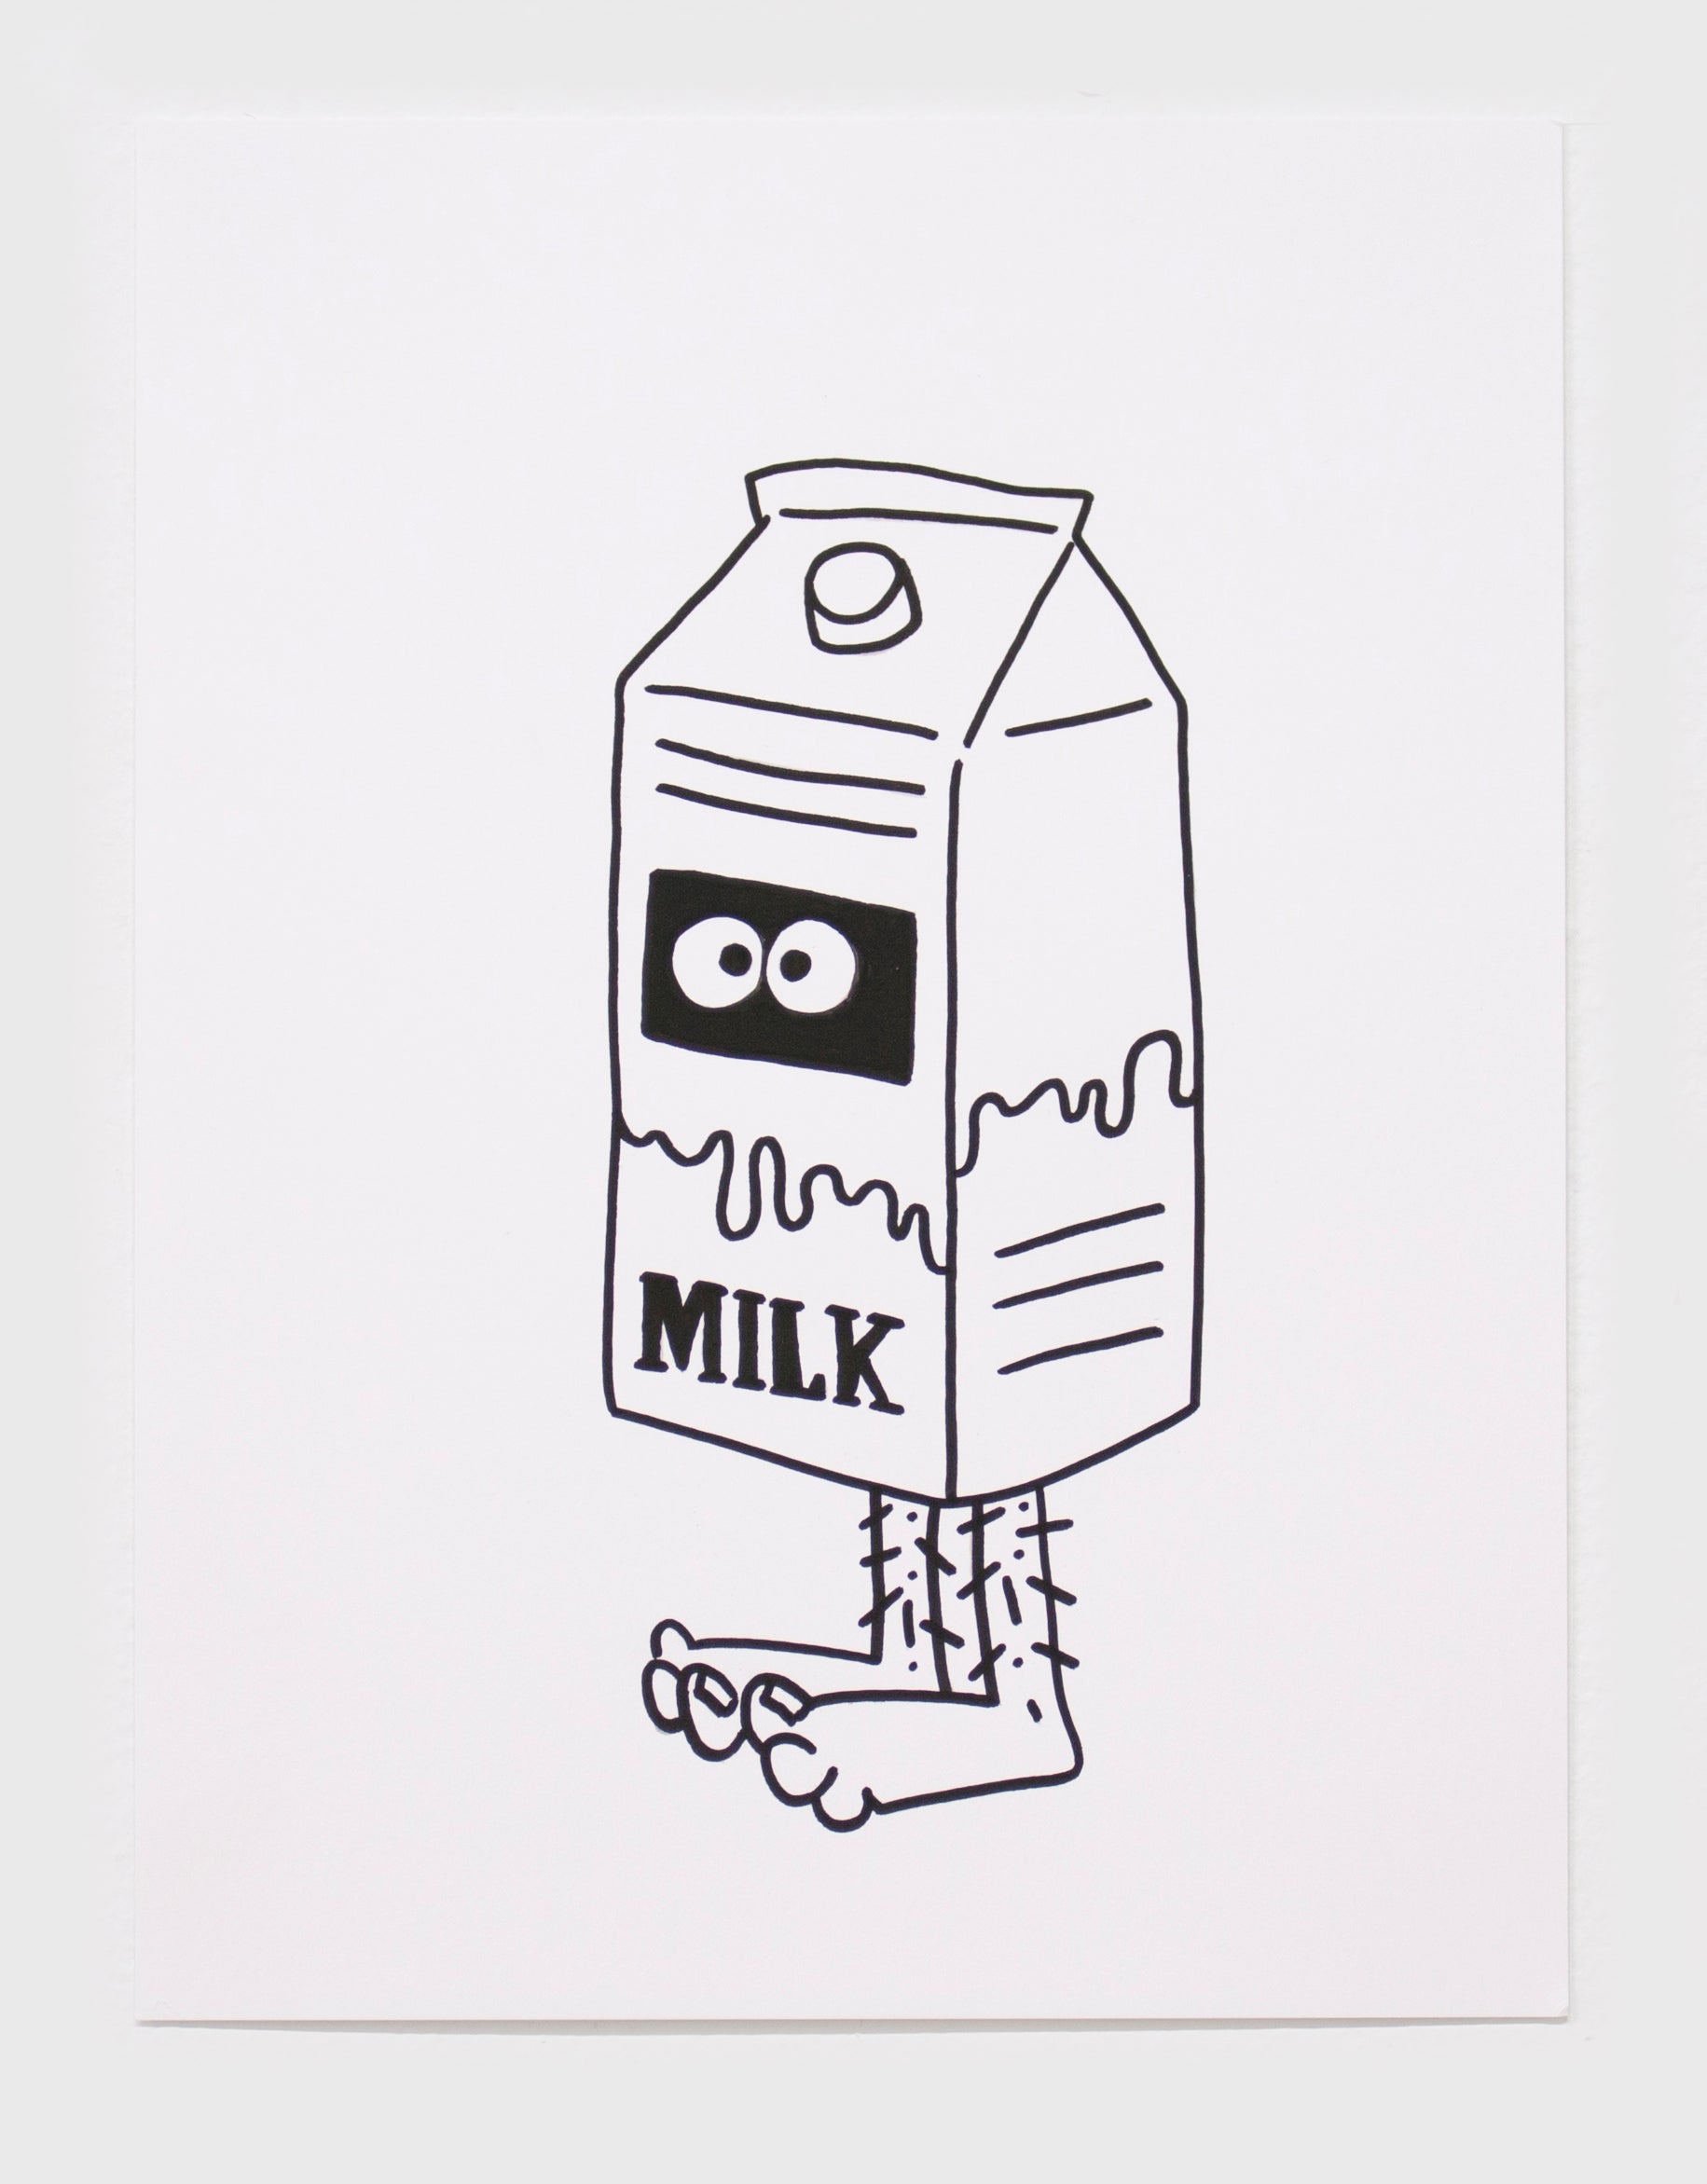 "Milkman #2" by Griffin Goodman